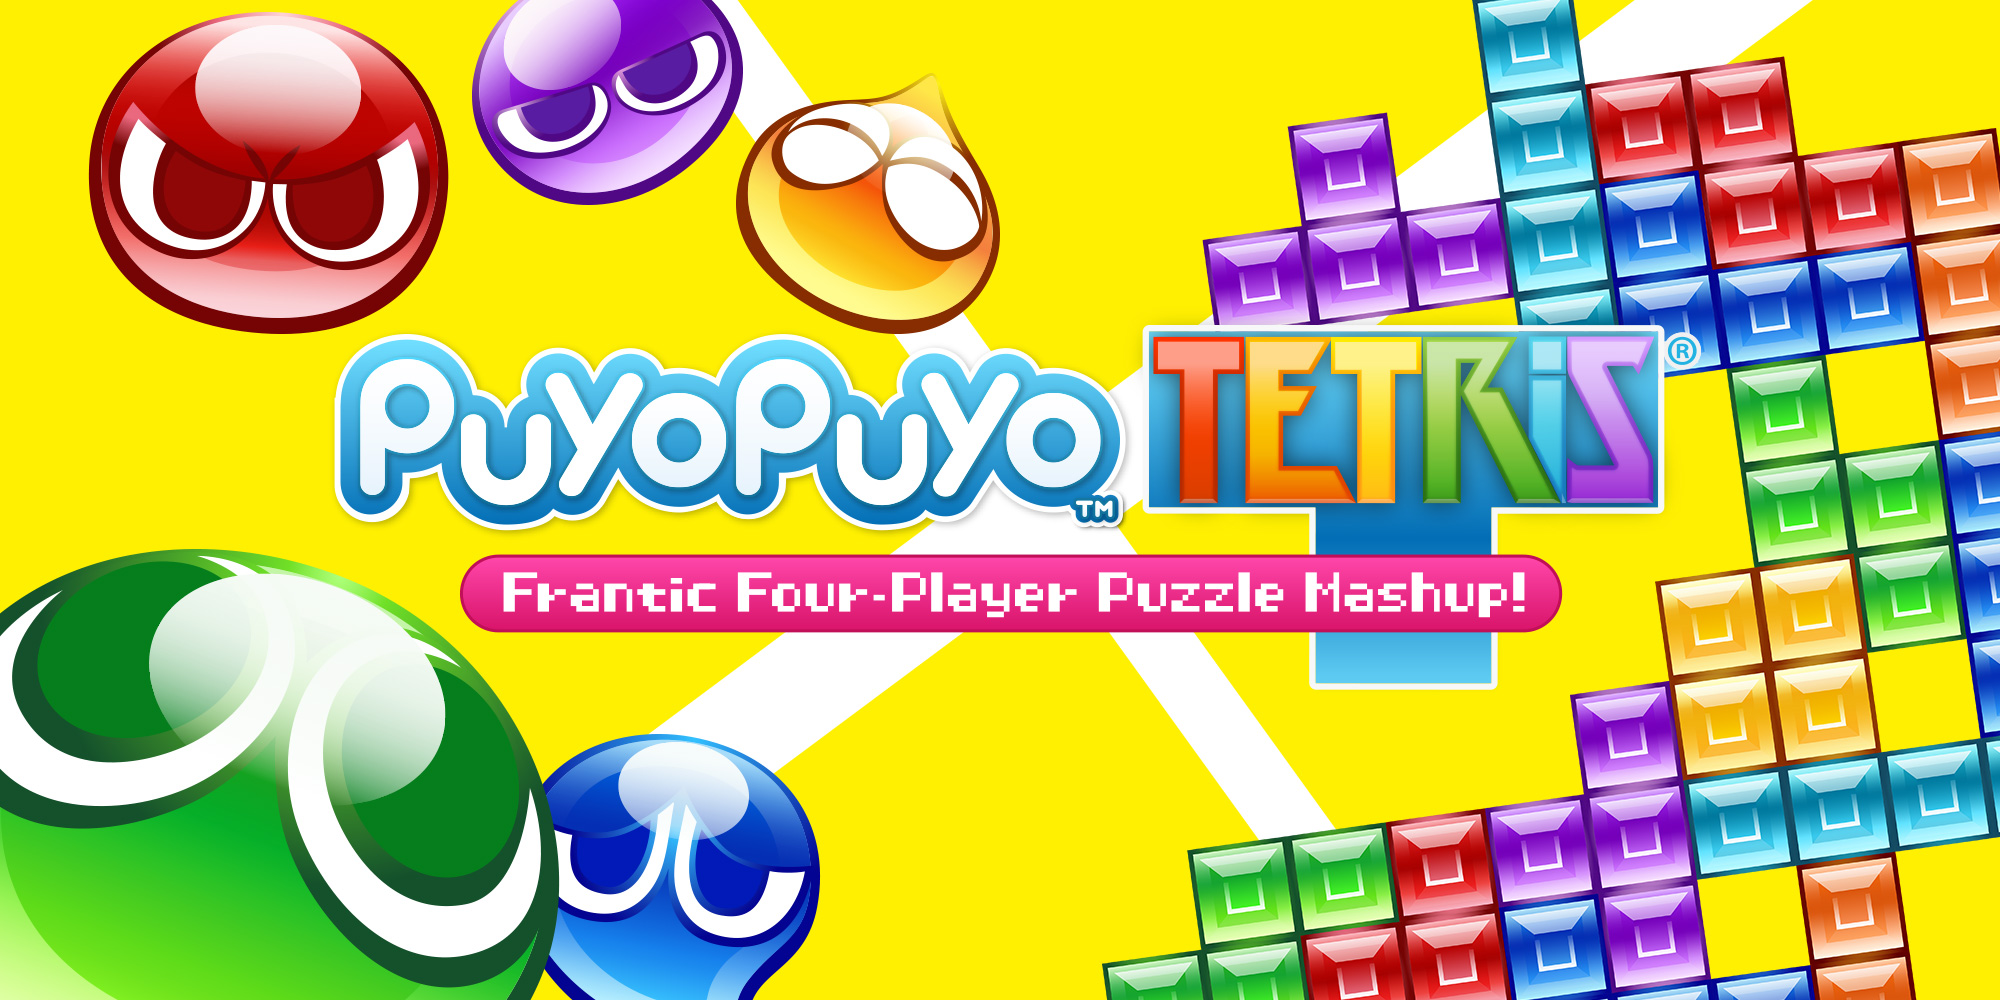 Puyo puyo tetris wii u iso download torrent